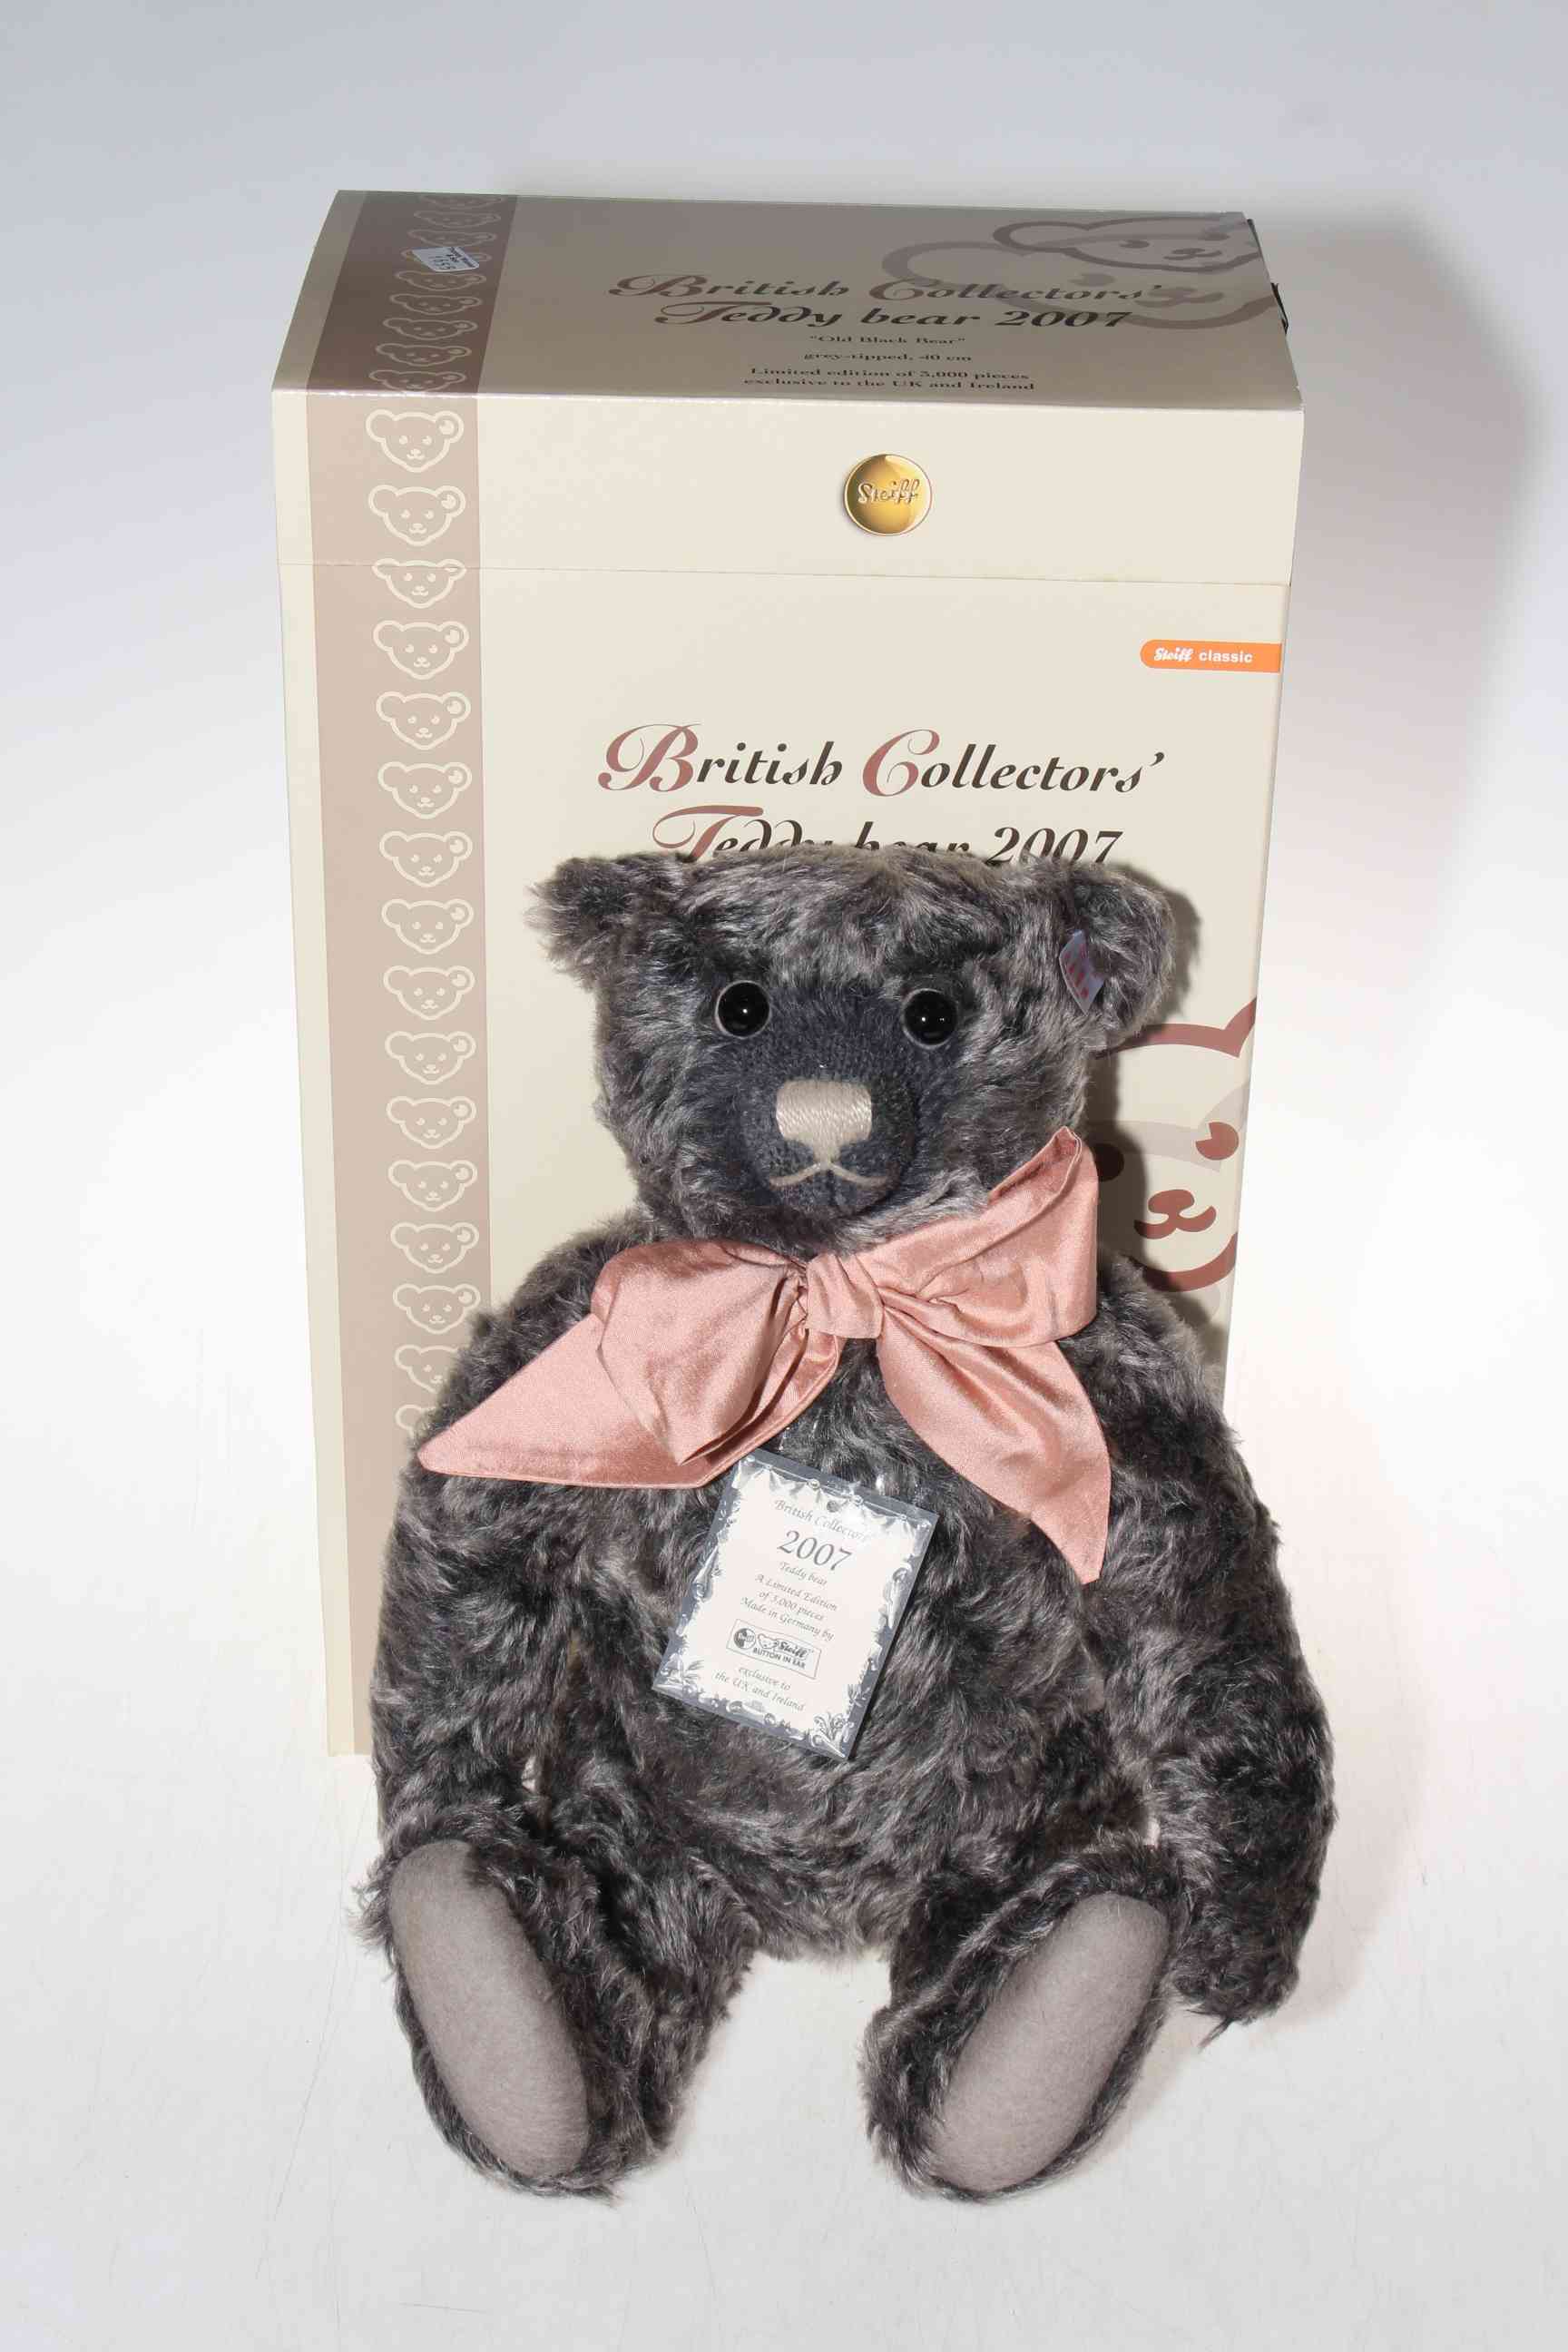 2007 Steiff limited edition Growler teddy bear in box.